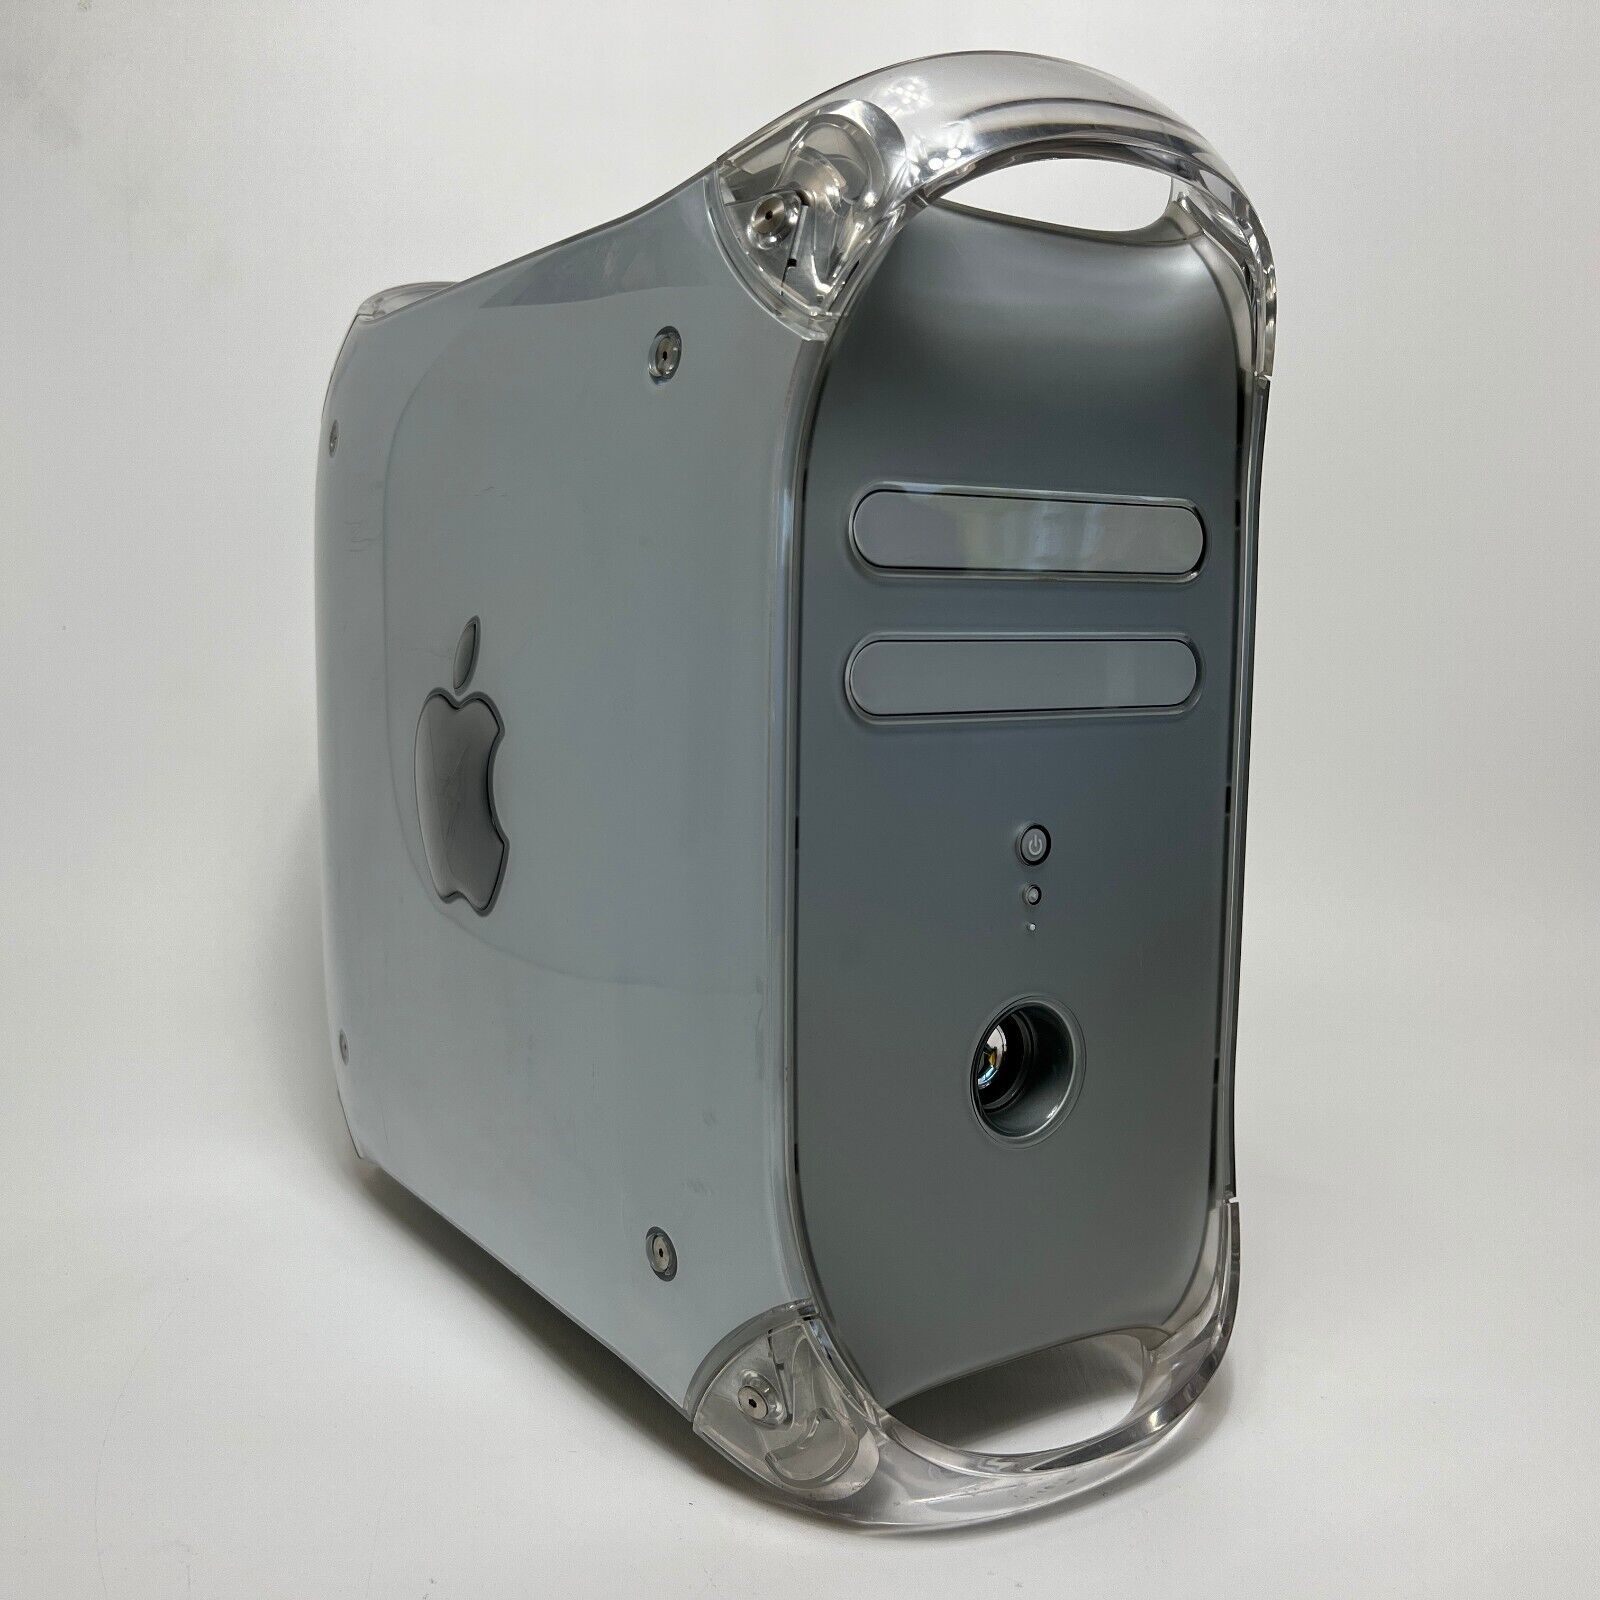 Apple Power Mac G4 Desktop | PowerPC 733MHz | 1GB RAM | 40GB HDD